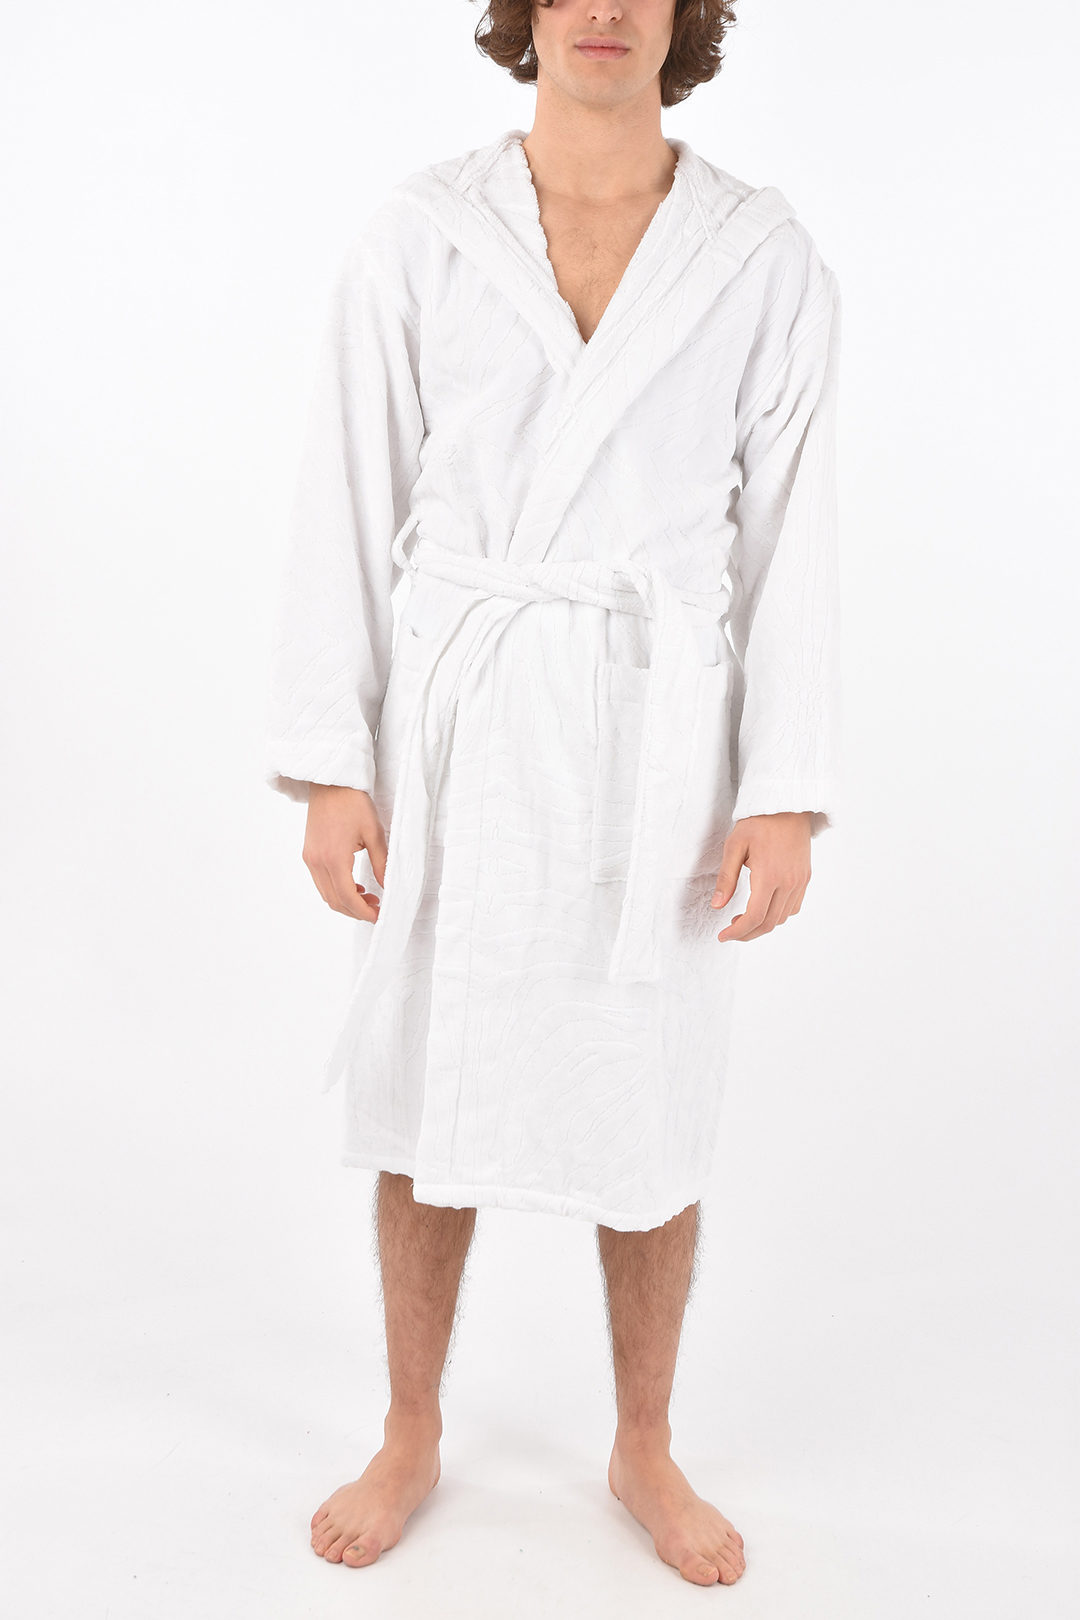 Details about   Roberto Cavalli sponge bathrobe with hood ZEB unisex blue 